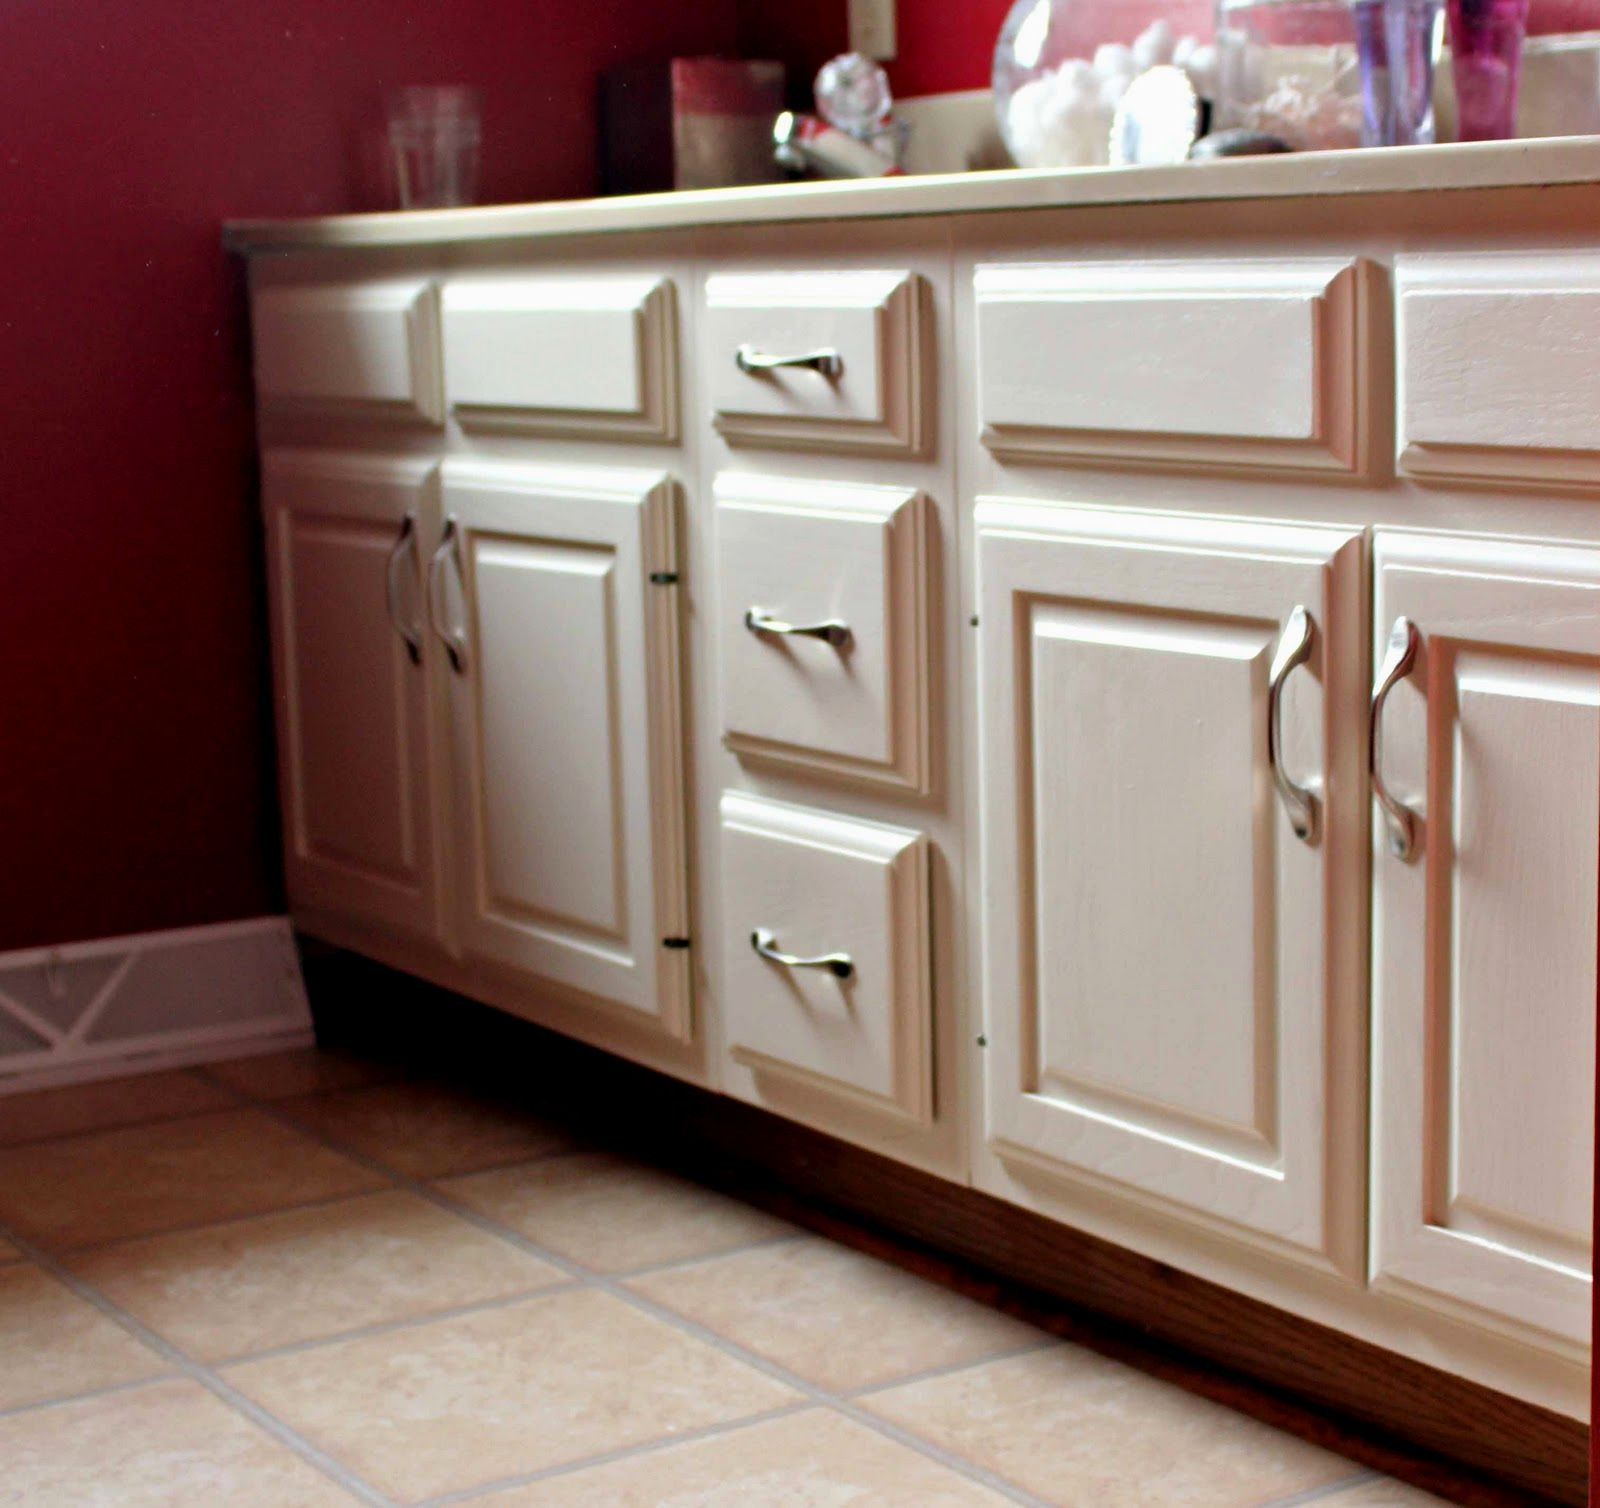 Repainting Bathroom Cabinets
 repainting bathroom cabinets – Bathroom Gallery